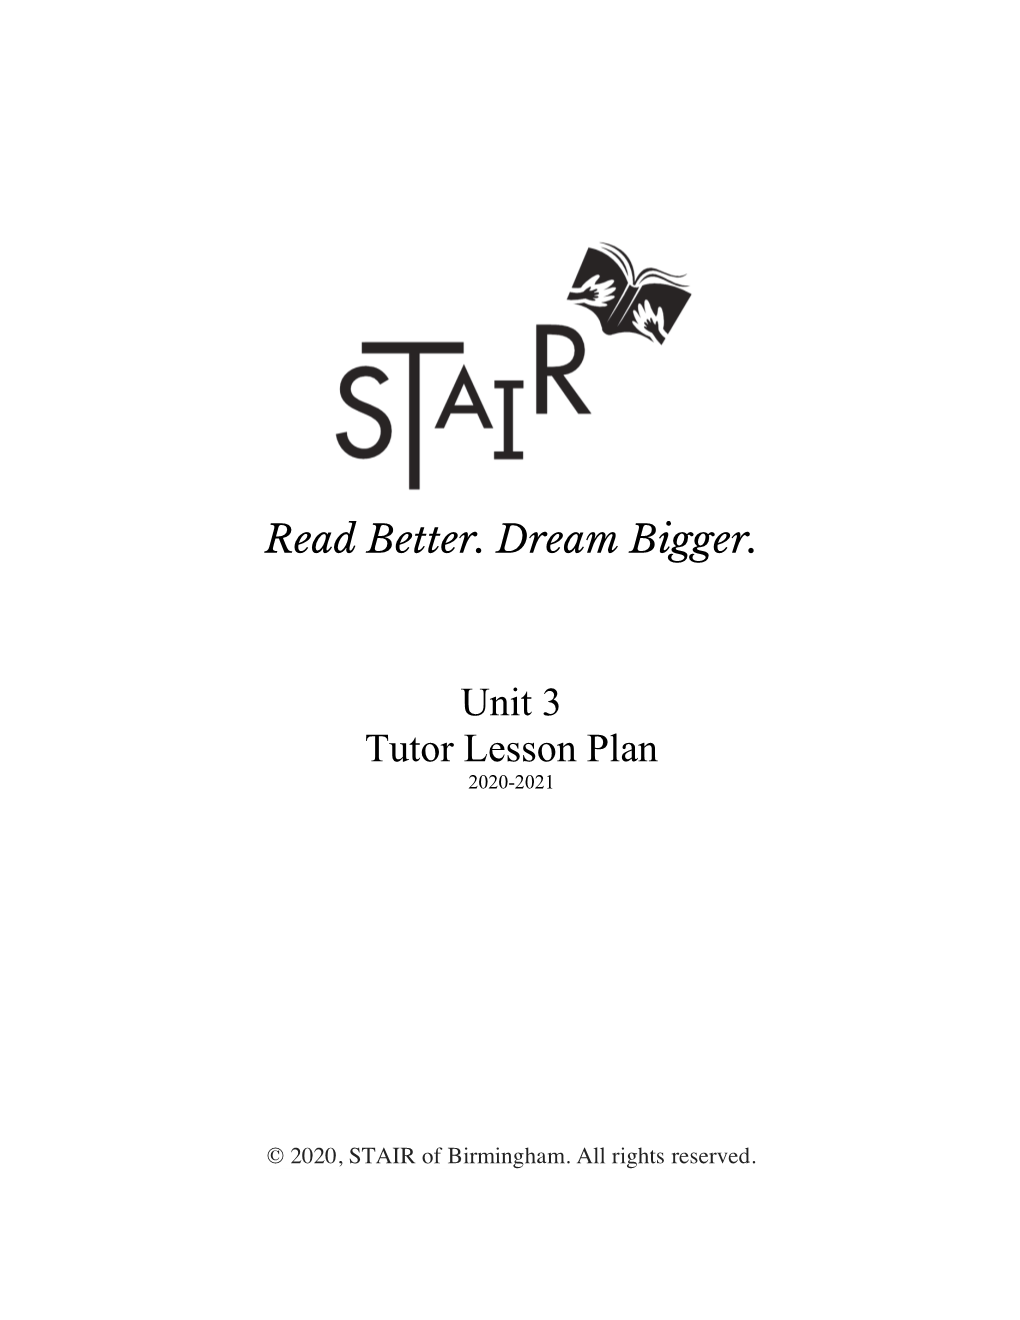 Unit 3 Tutor Lesson Plan 2020-2021